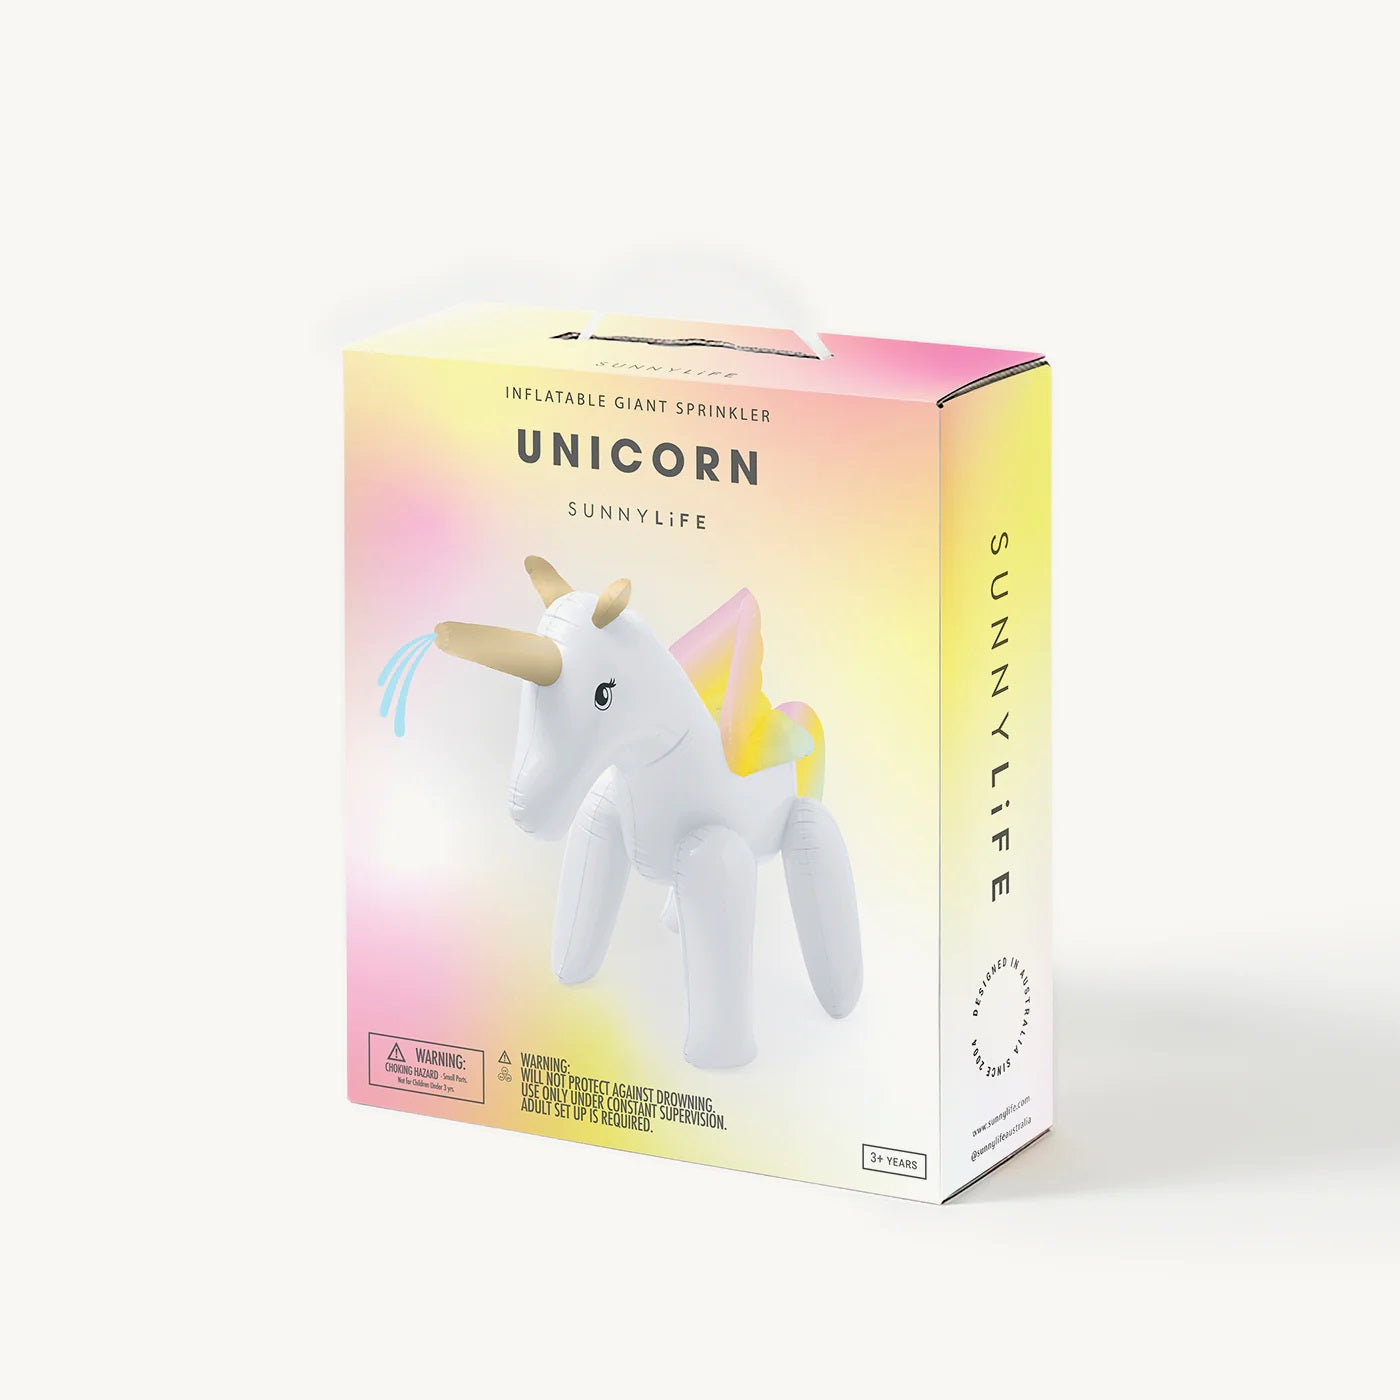 Sunnylife Giant Inflatable Sprinkler - Unicorn